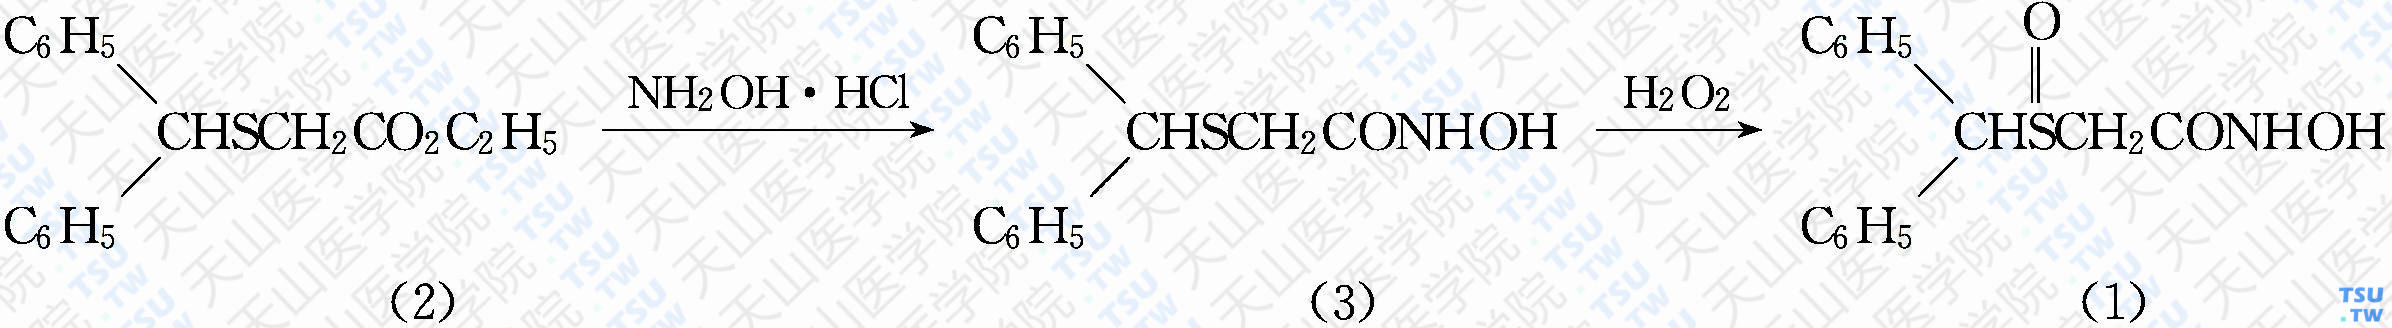 阿屈非尼（分子式：C<sub>15</sub>H<sub>15</sub>NO<sub>3</sub>S）的合成方法路线及其结构式